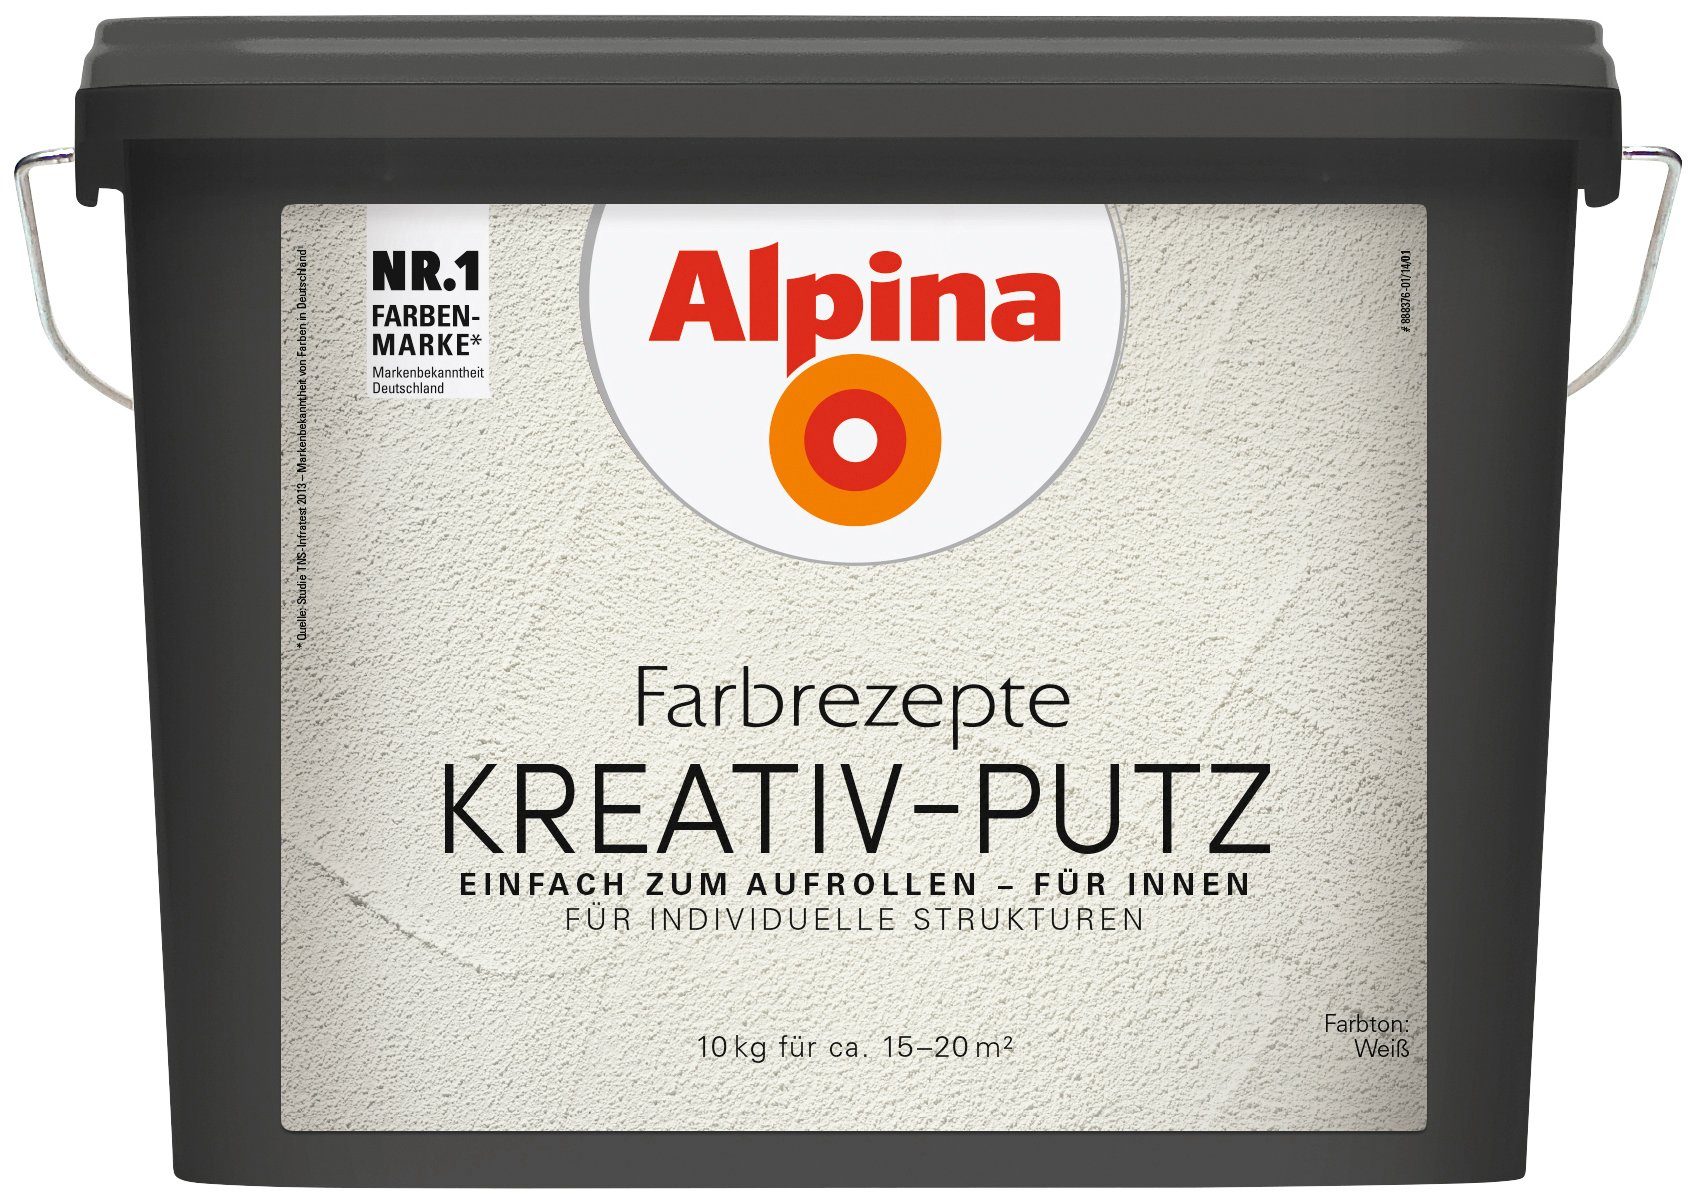 Alpina Kunstharzputz Farbrezepte - Kreativ-Putz weiß, kg 10